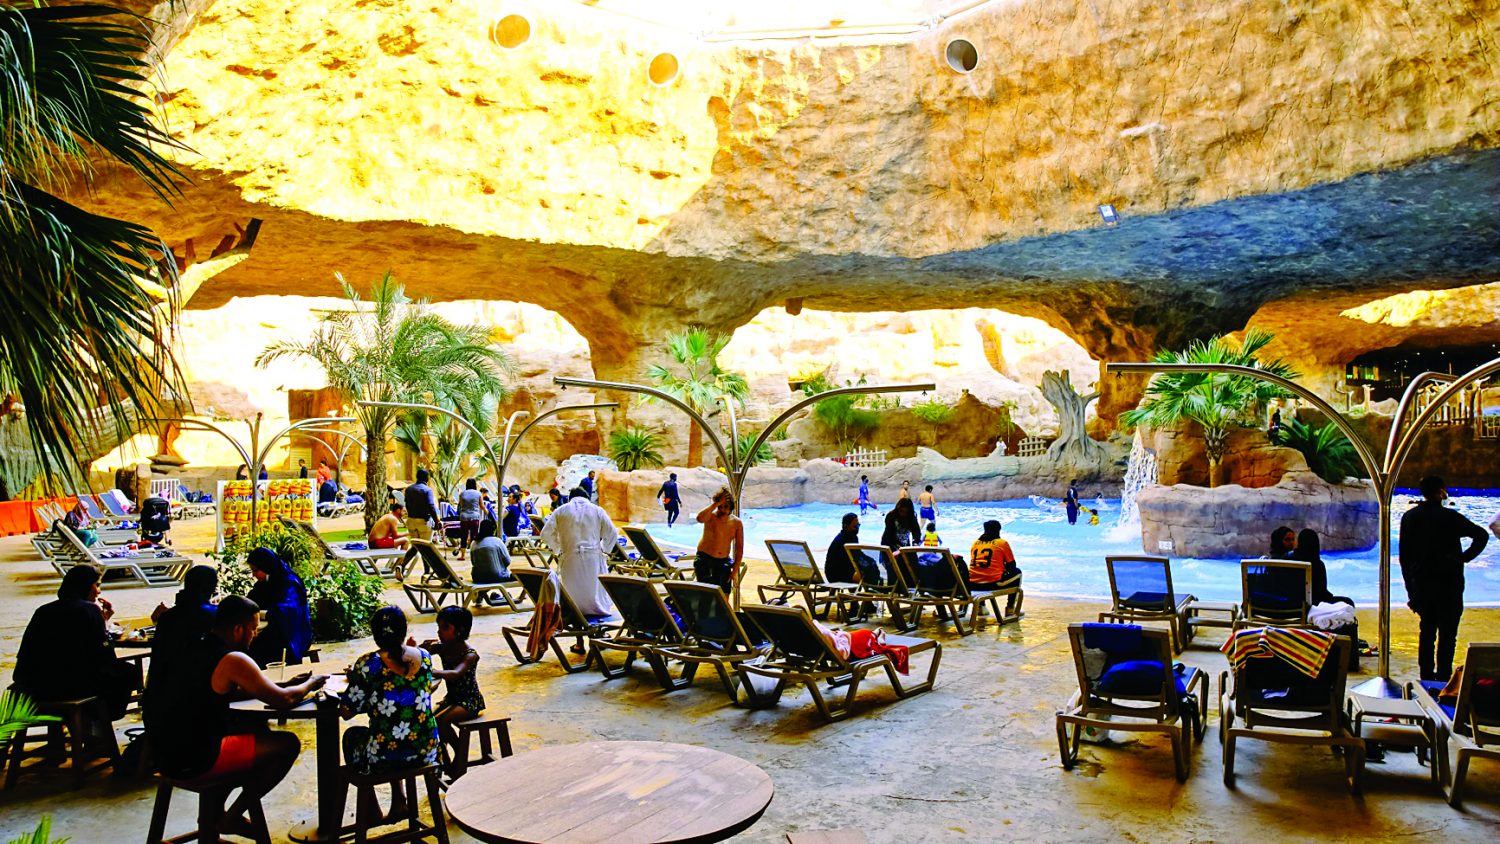 Desert Falls theme park opens partially